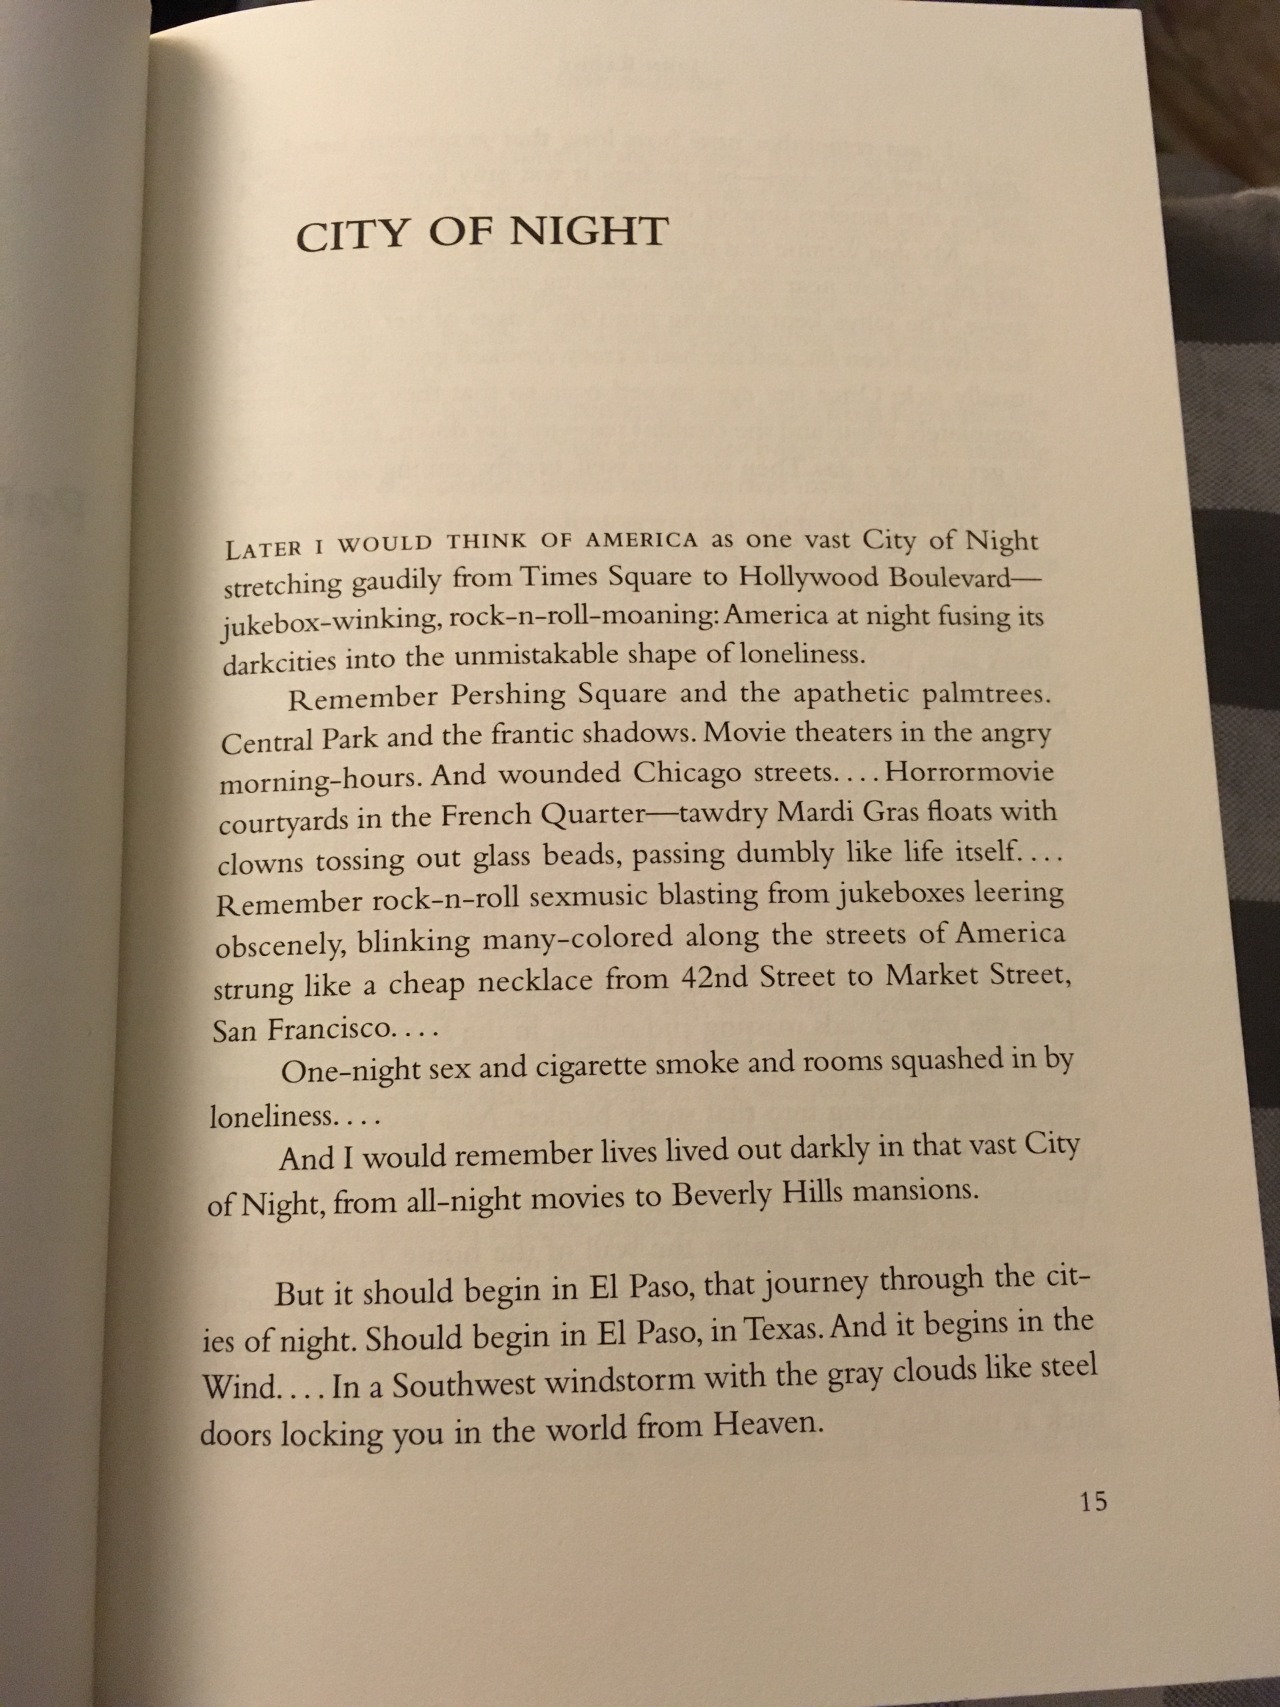 City of Night by John Rechy